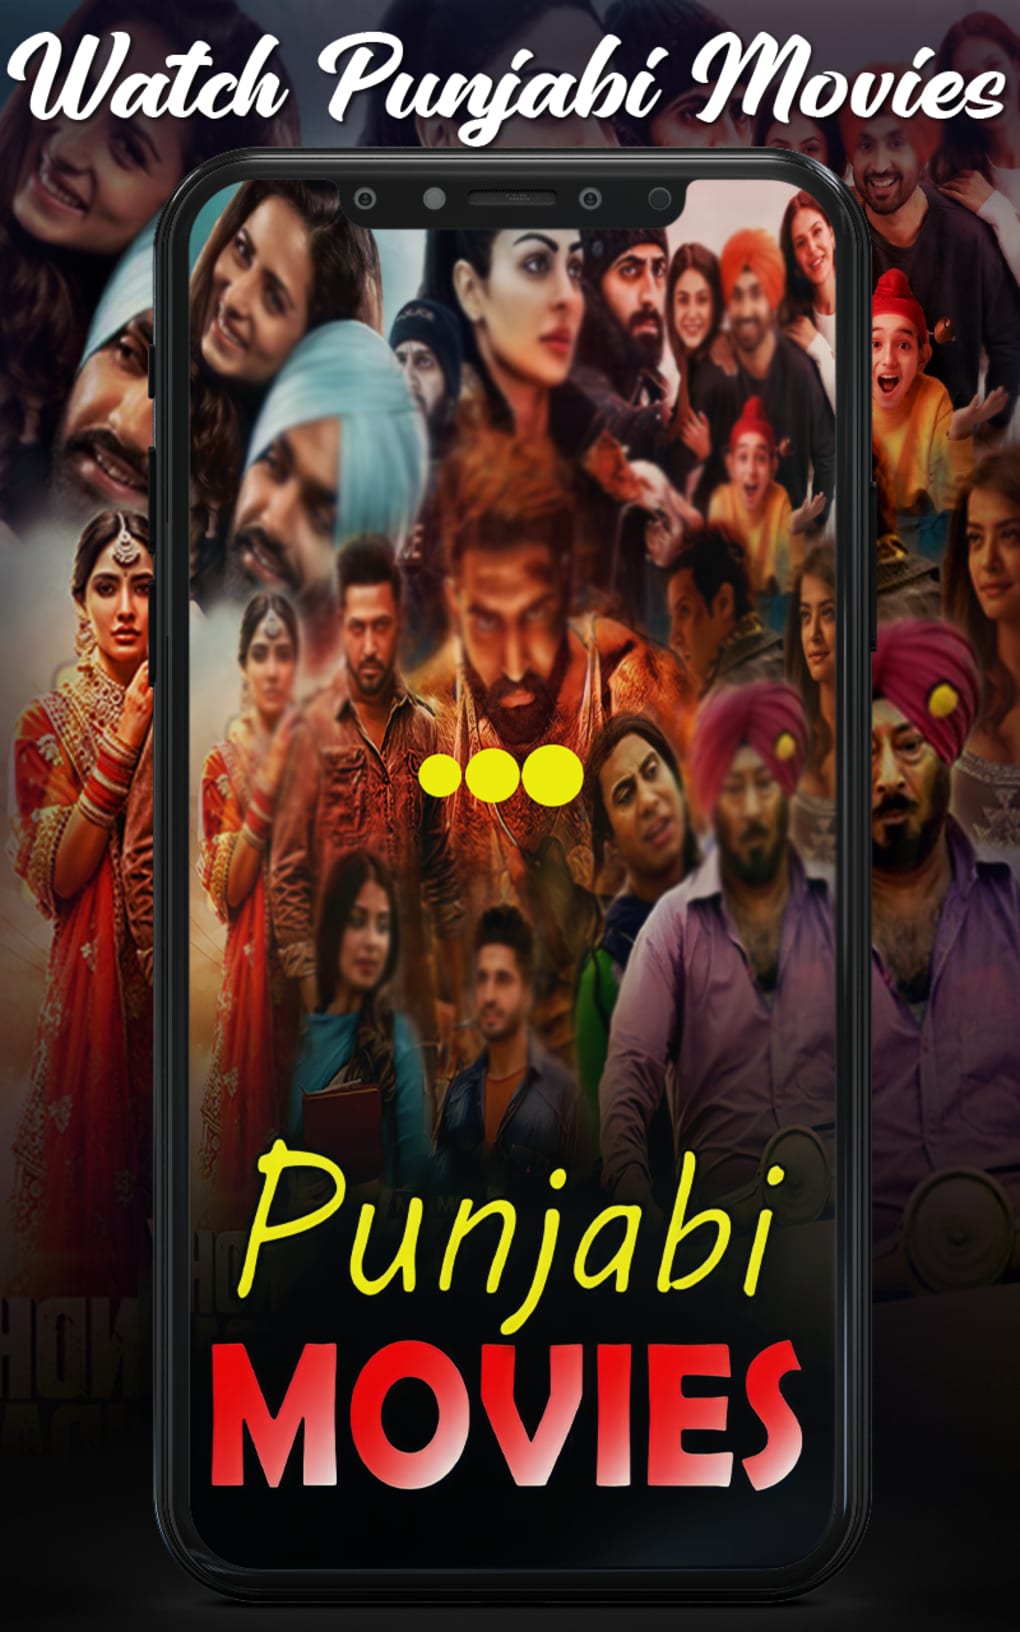 dory fish recommends hindi punjabi movie download pic